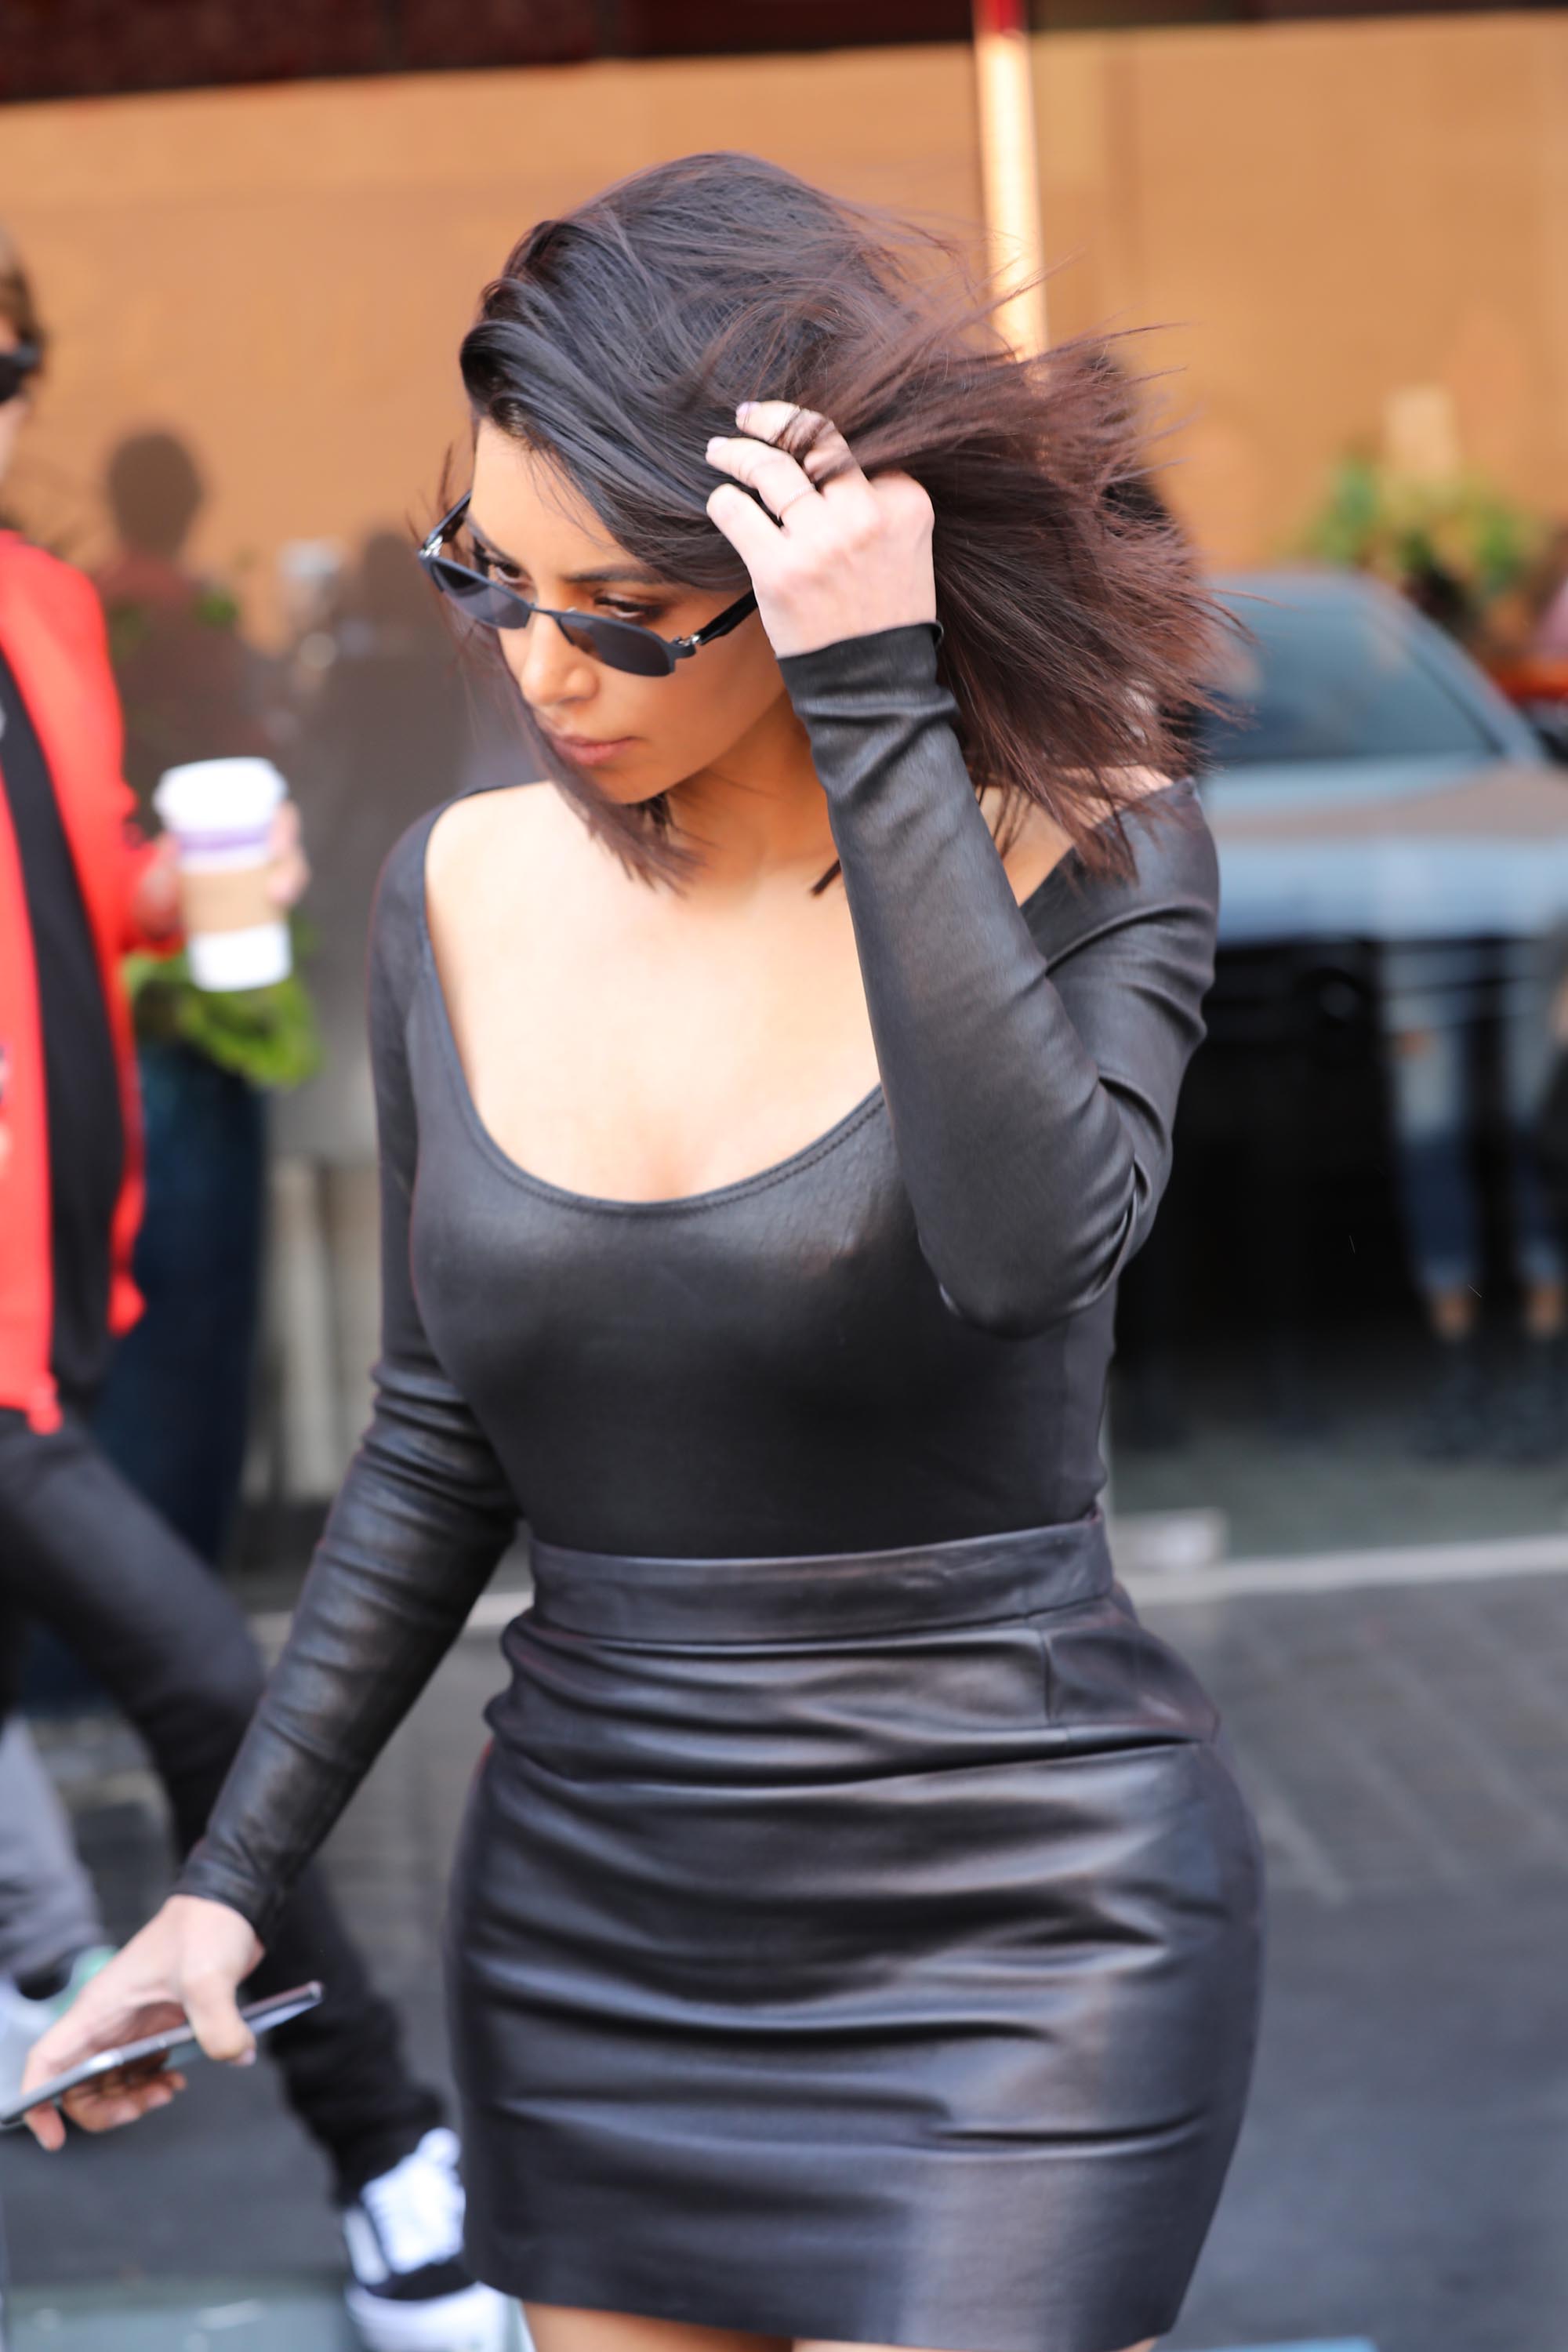 Kim Kardashian arrives to Film KUWTK